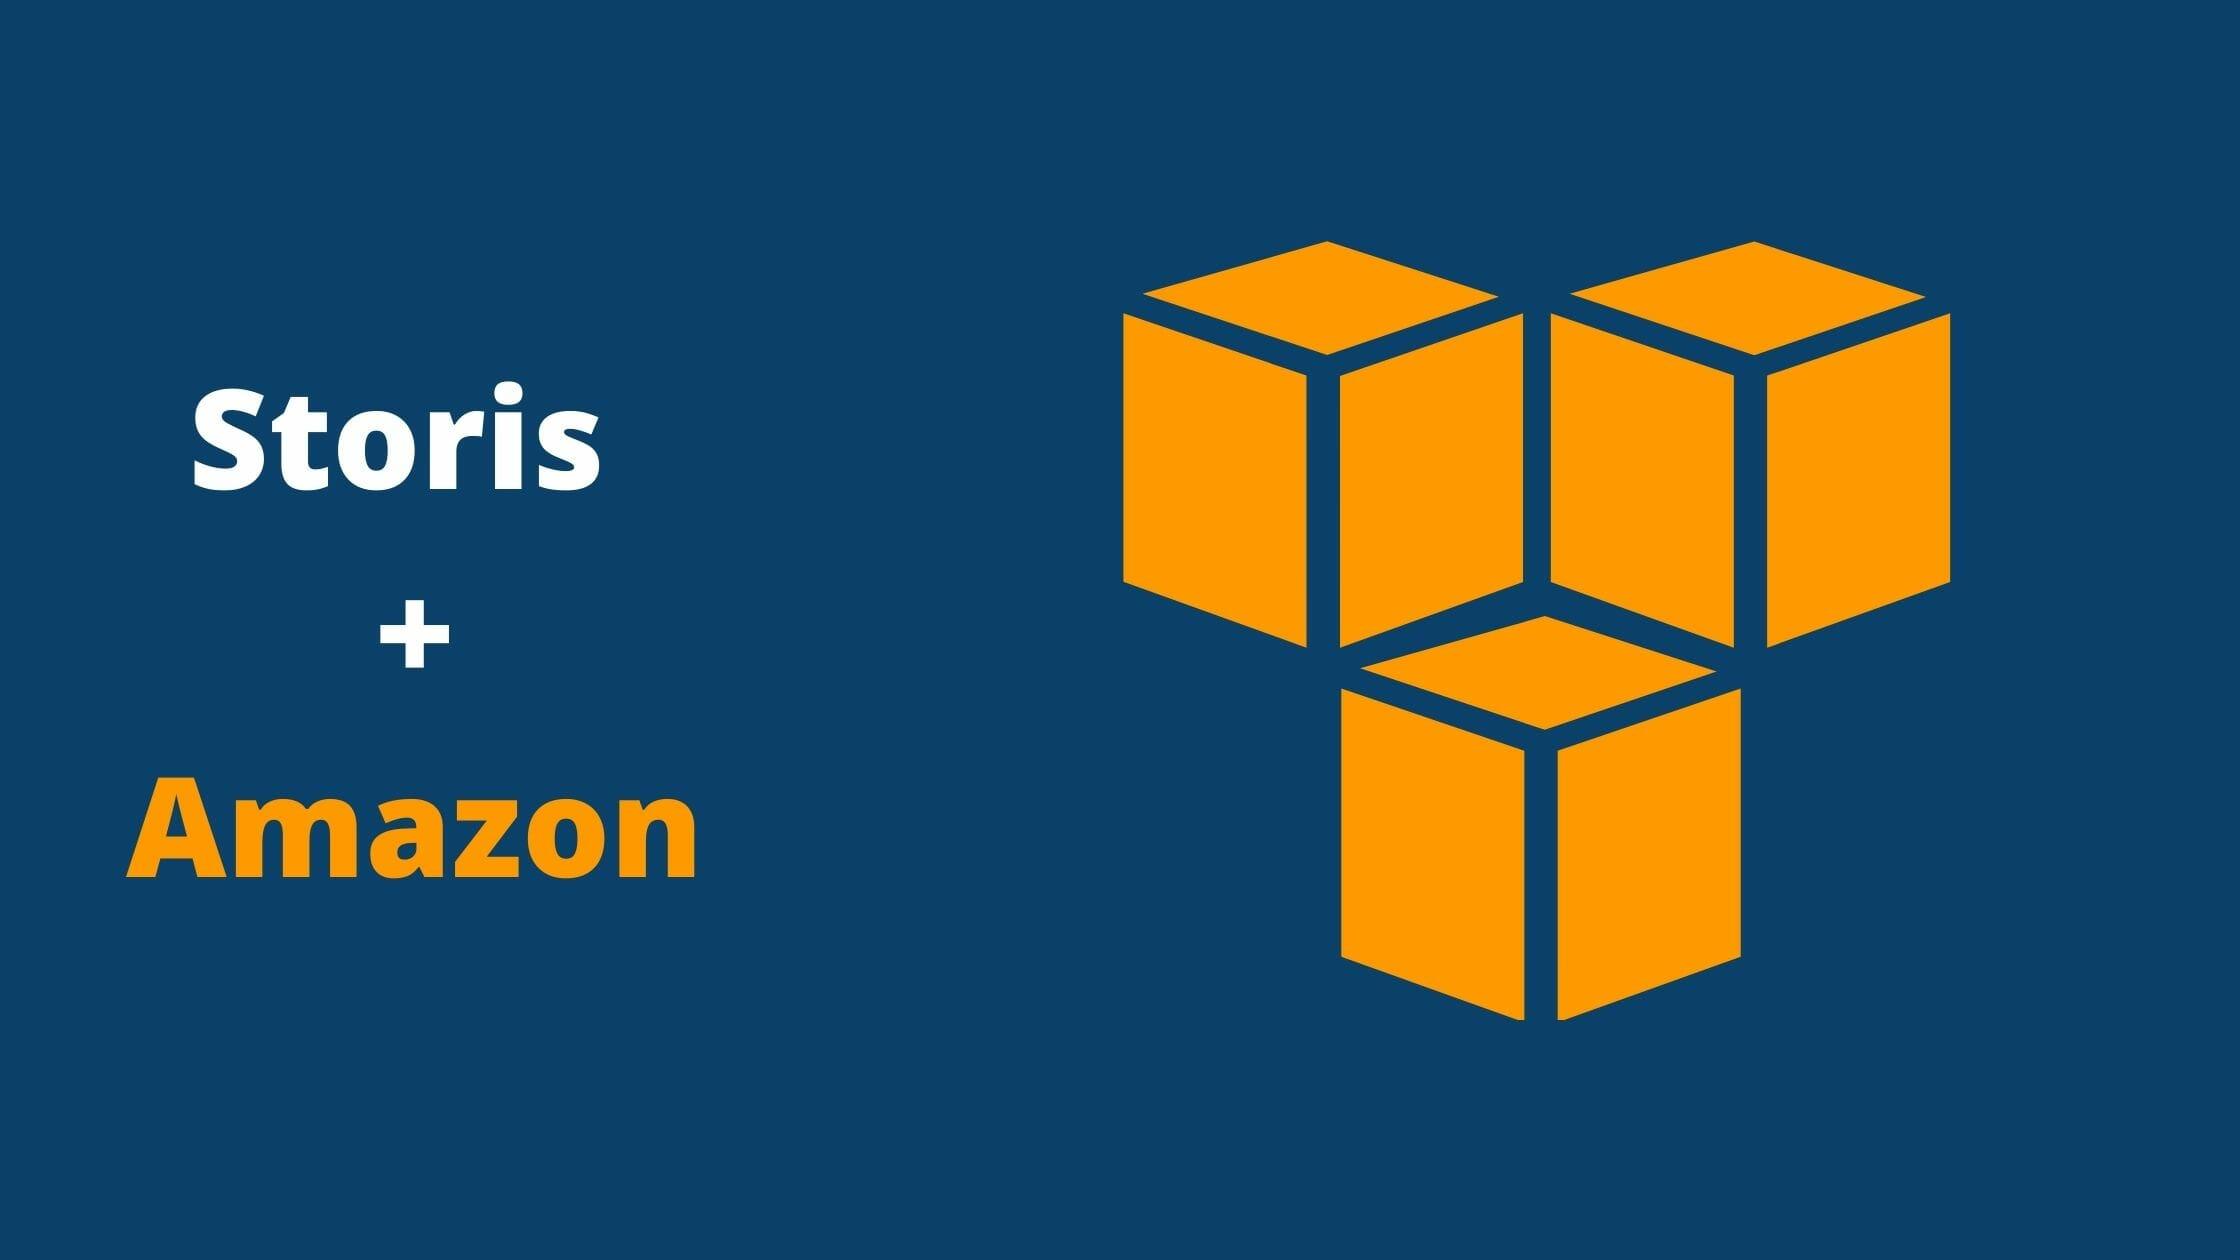 Image icon with the words "Storis + Amazon".
